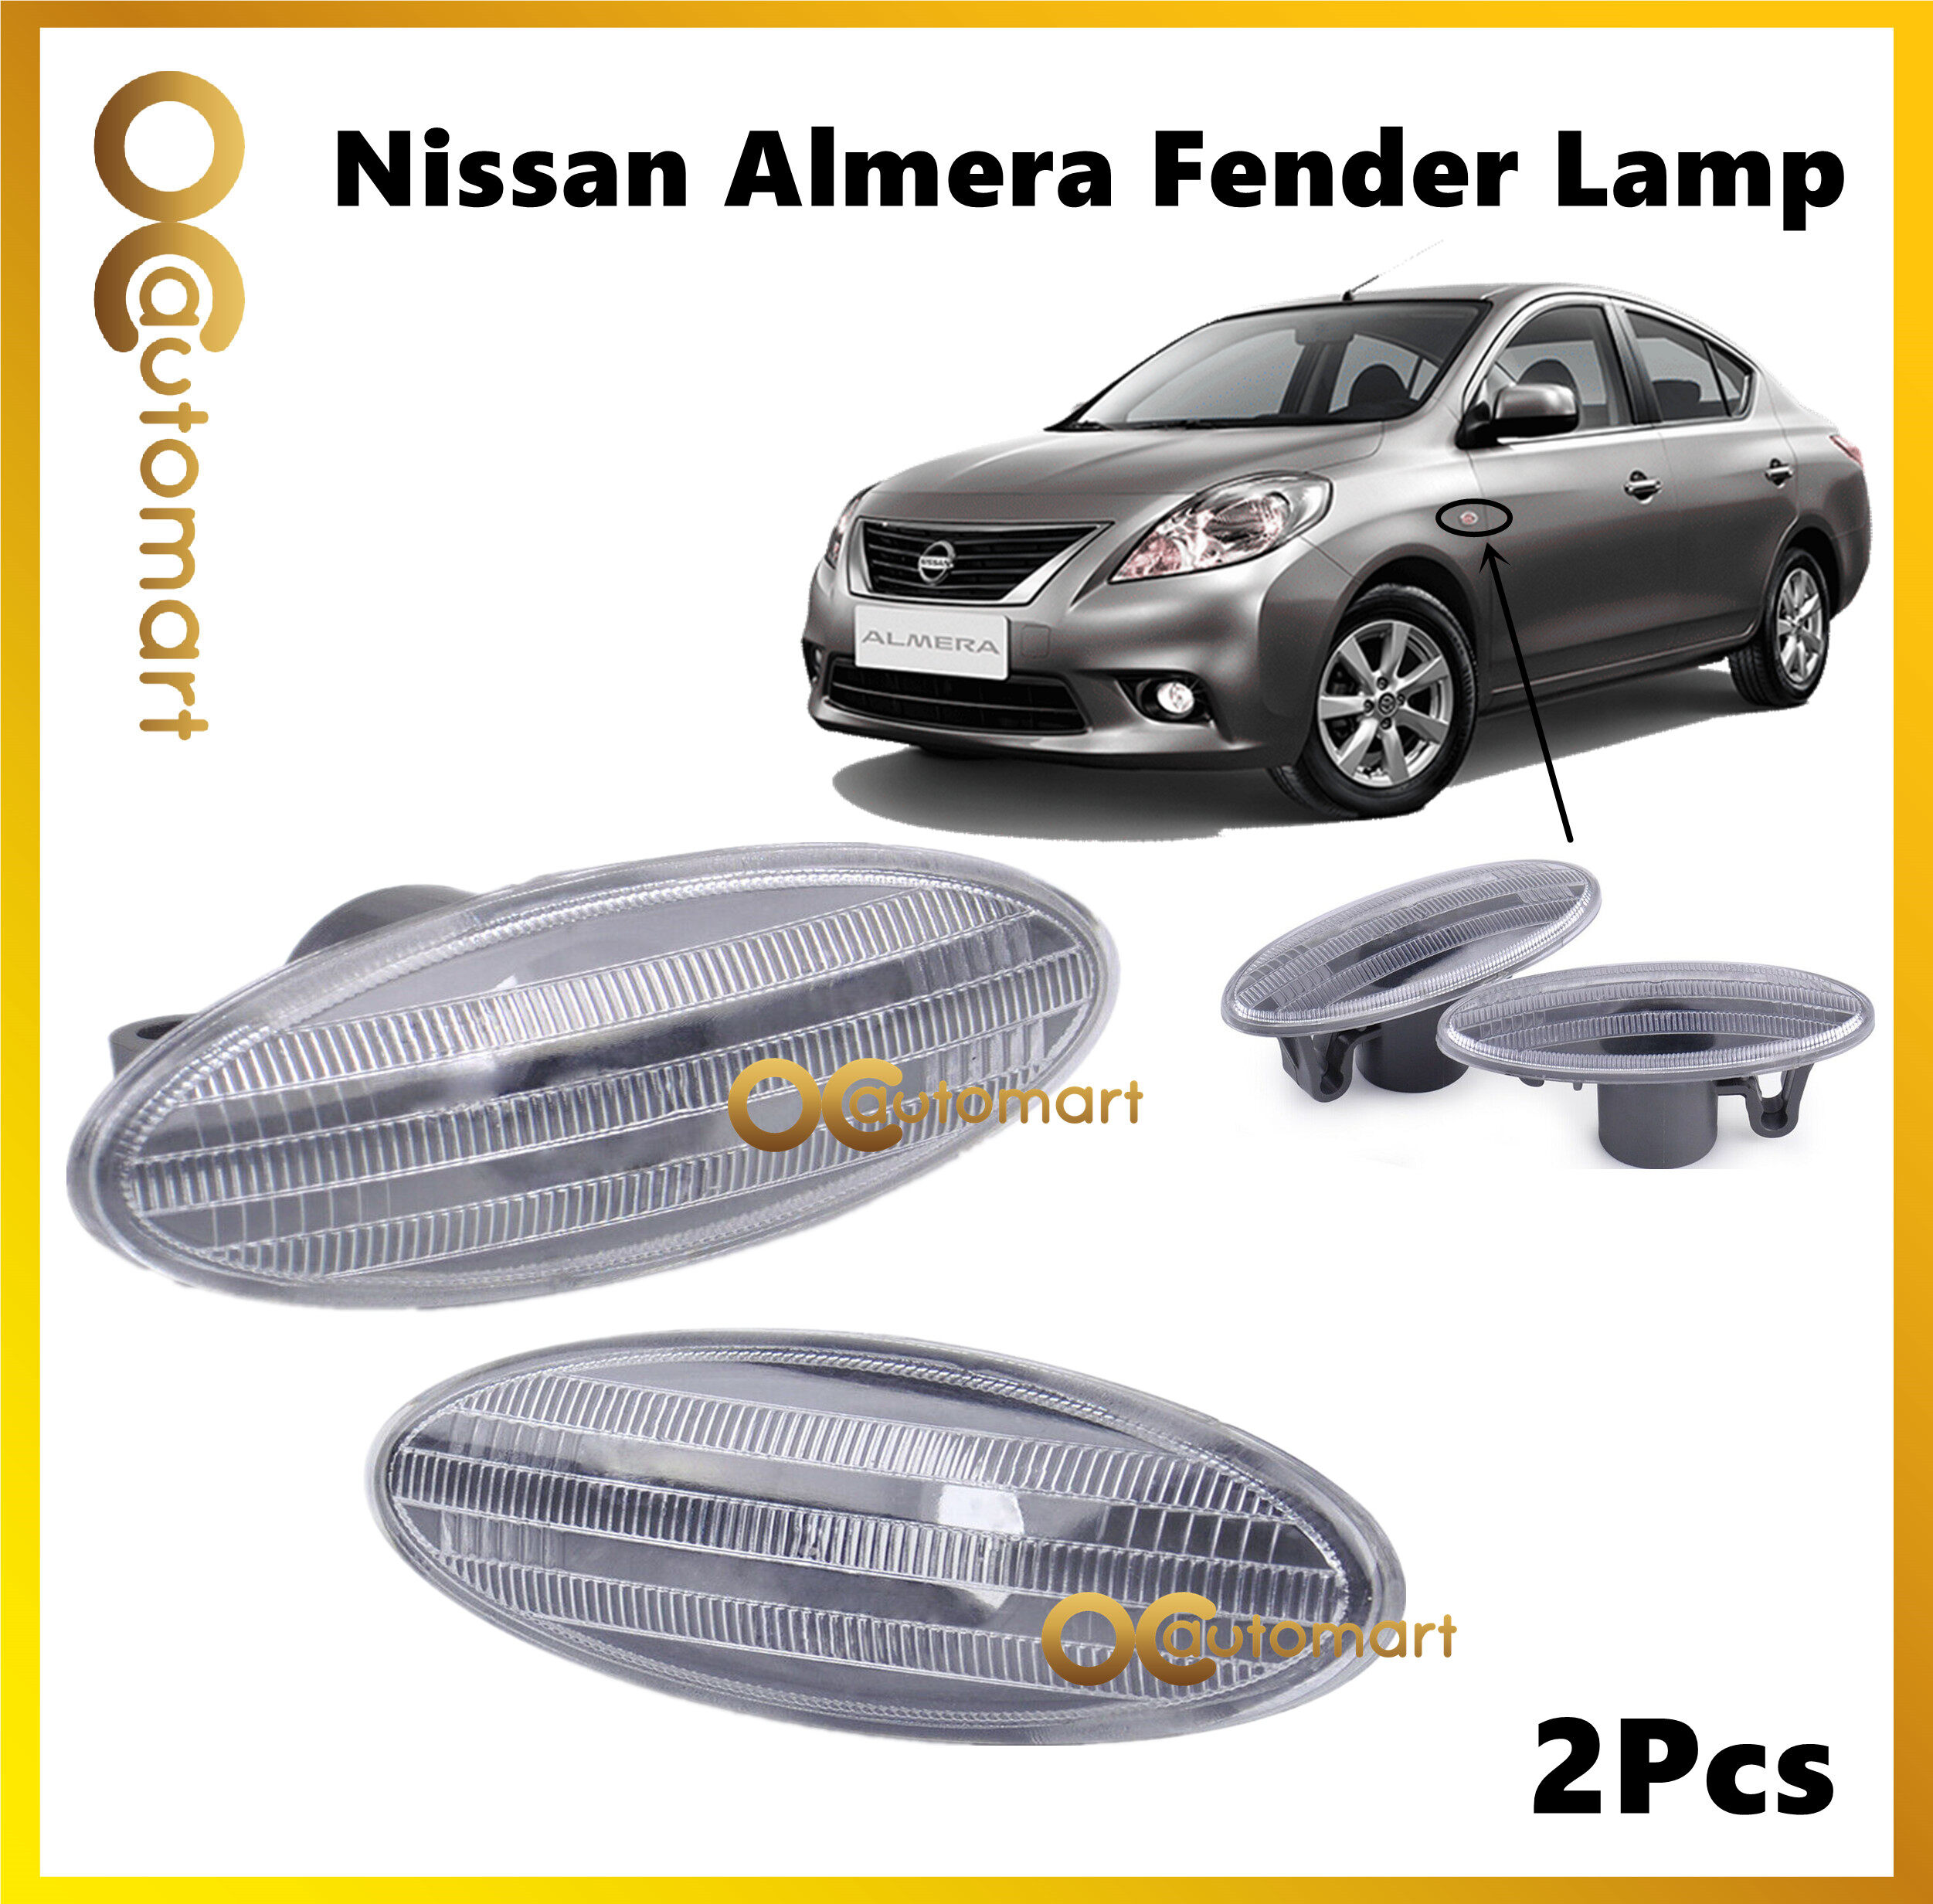 ( 1 Set ) Nissan Almera 2012 Fender Lamp Signal Light With Bulb